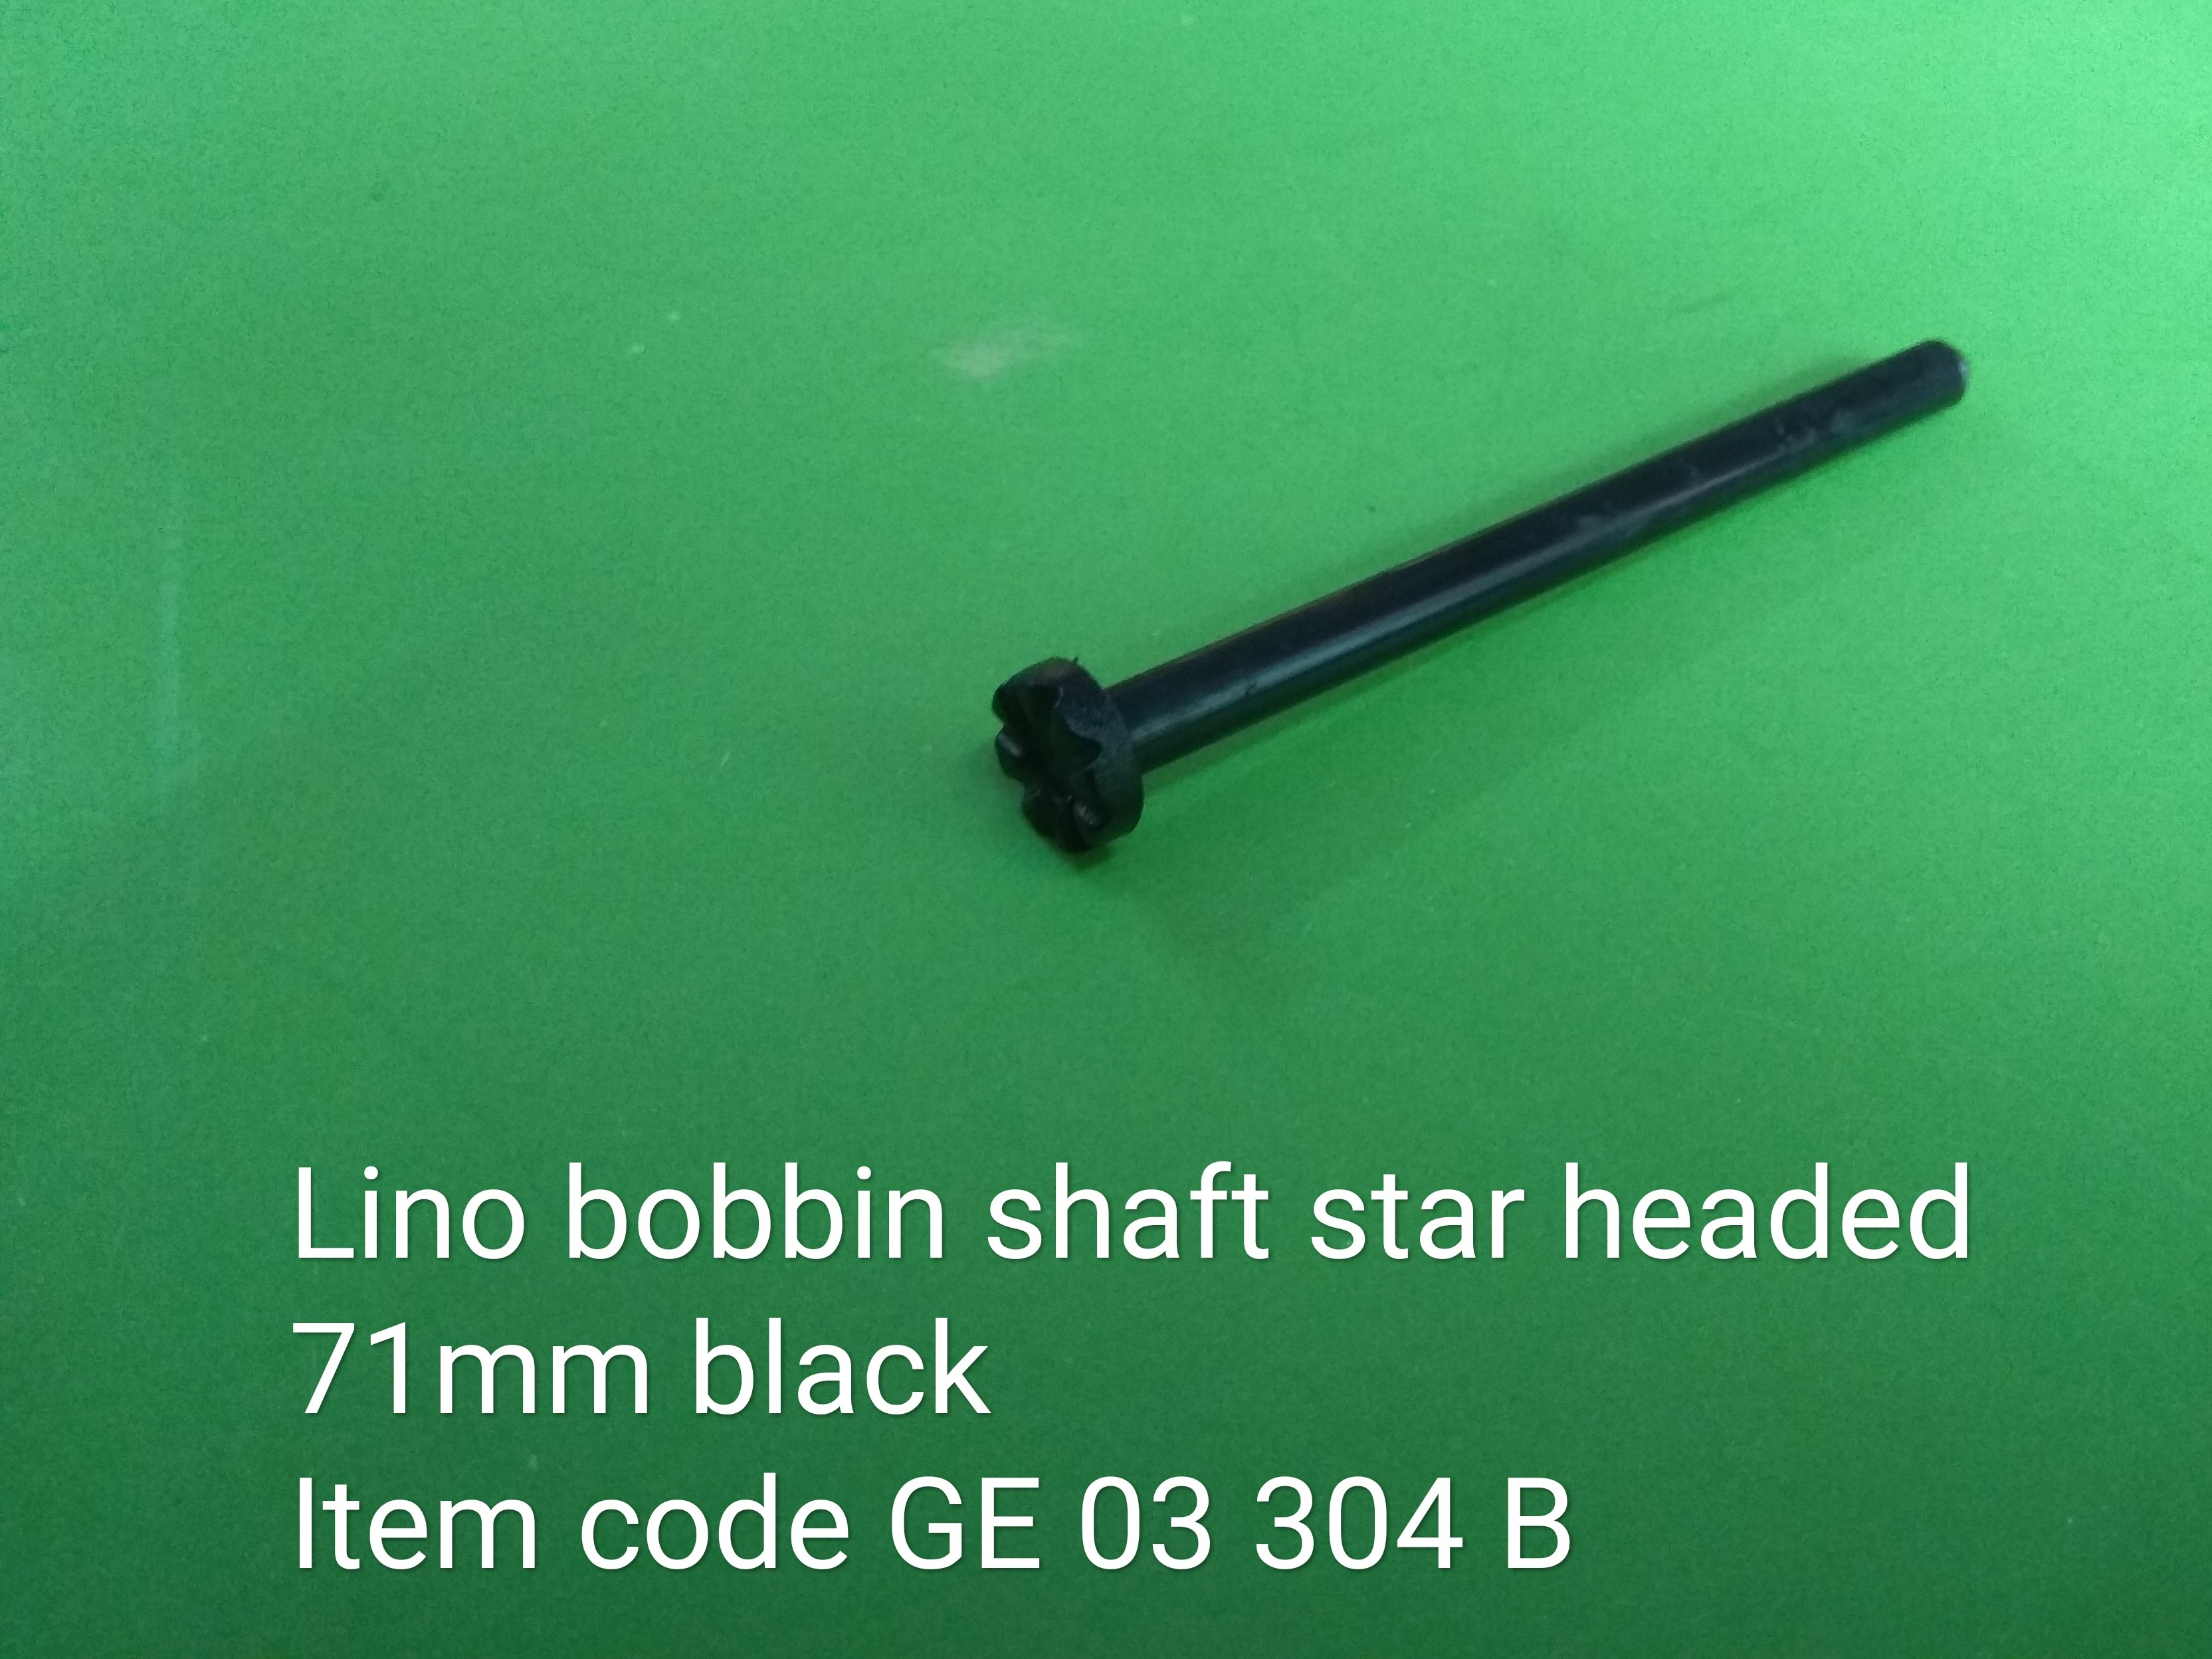 GE_03_304B_Lino_Bobbin_Shaft_Star_Headed_71mm_Black_54_69.jpg